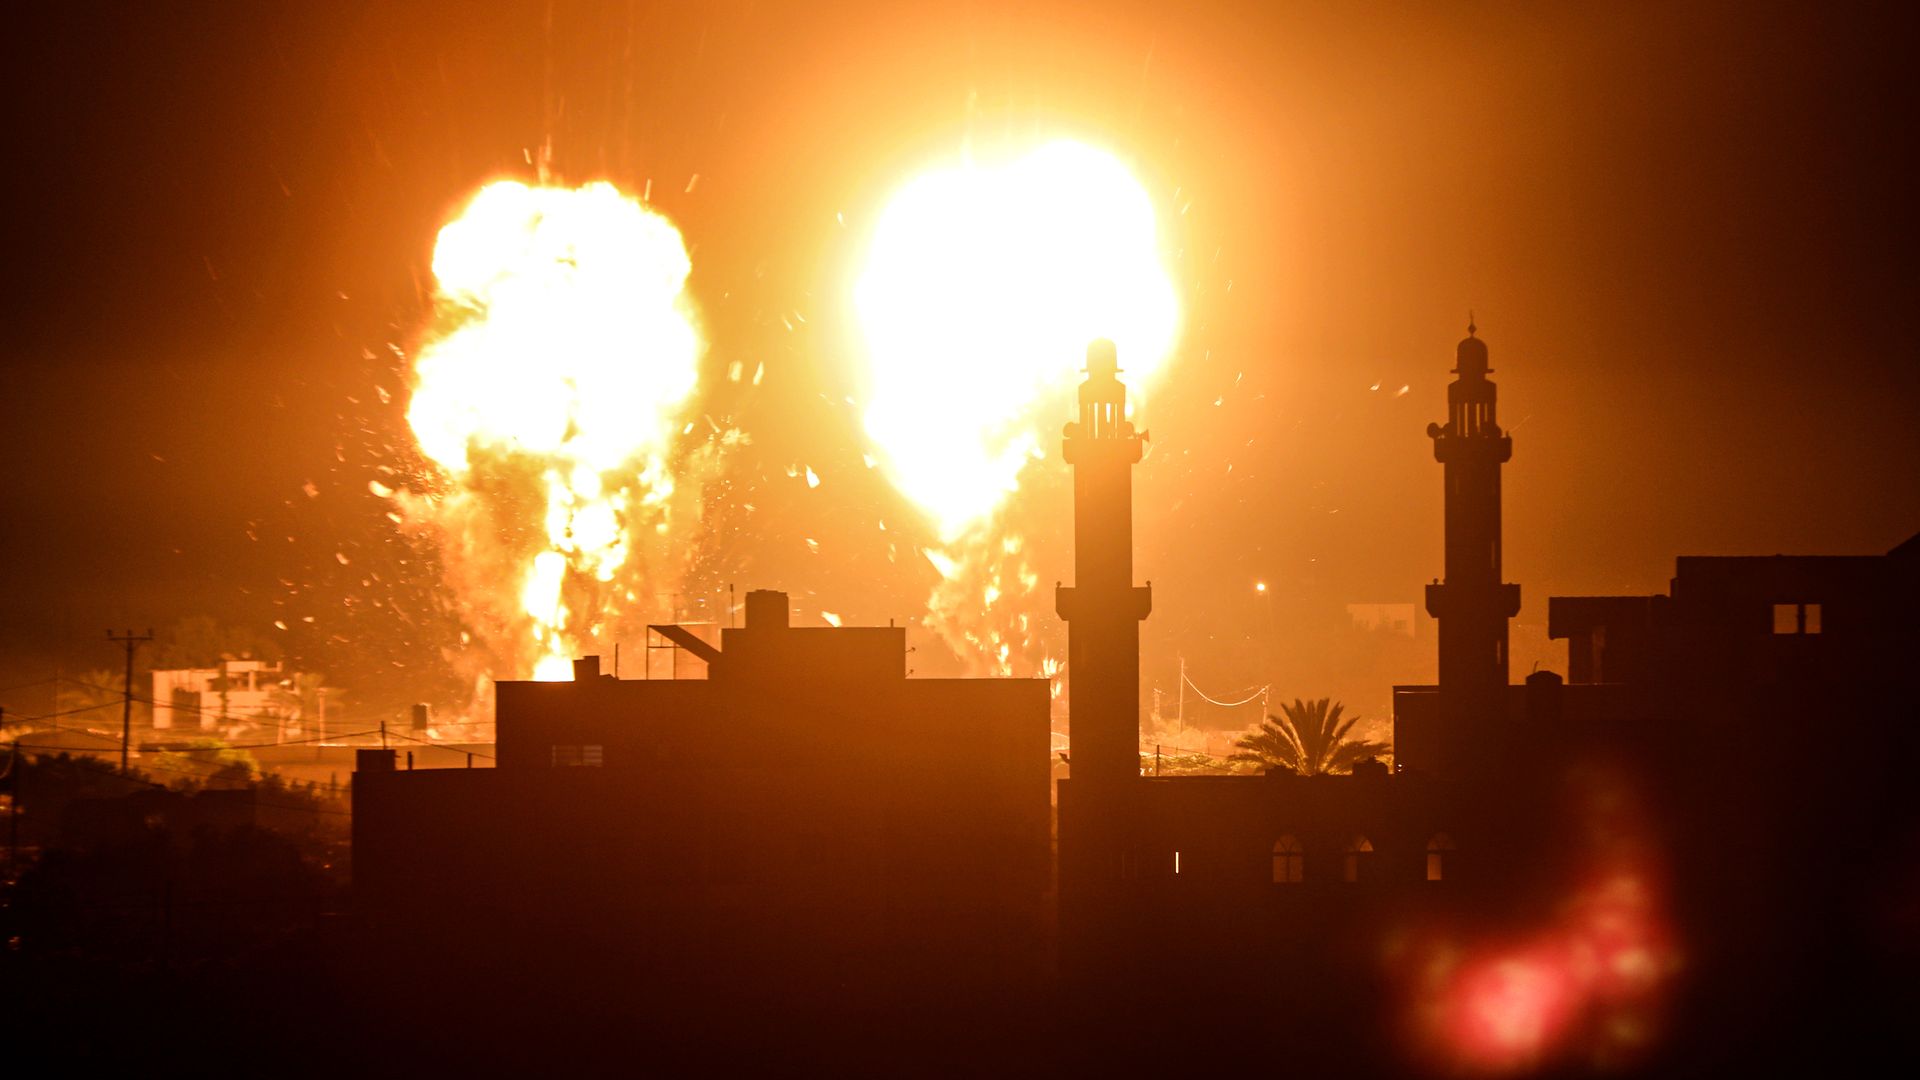  Flames are seen after an Israeli air strike hit Hamas targets in Gaza City, Gaza on June 15, 2021. (Photo by Ali Jadallah/Anadolu Agency via Getty Images)